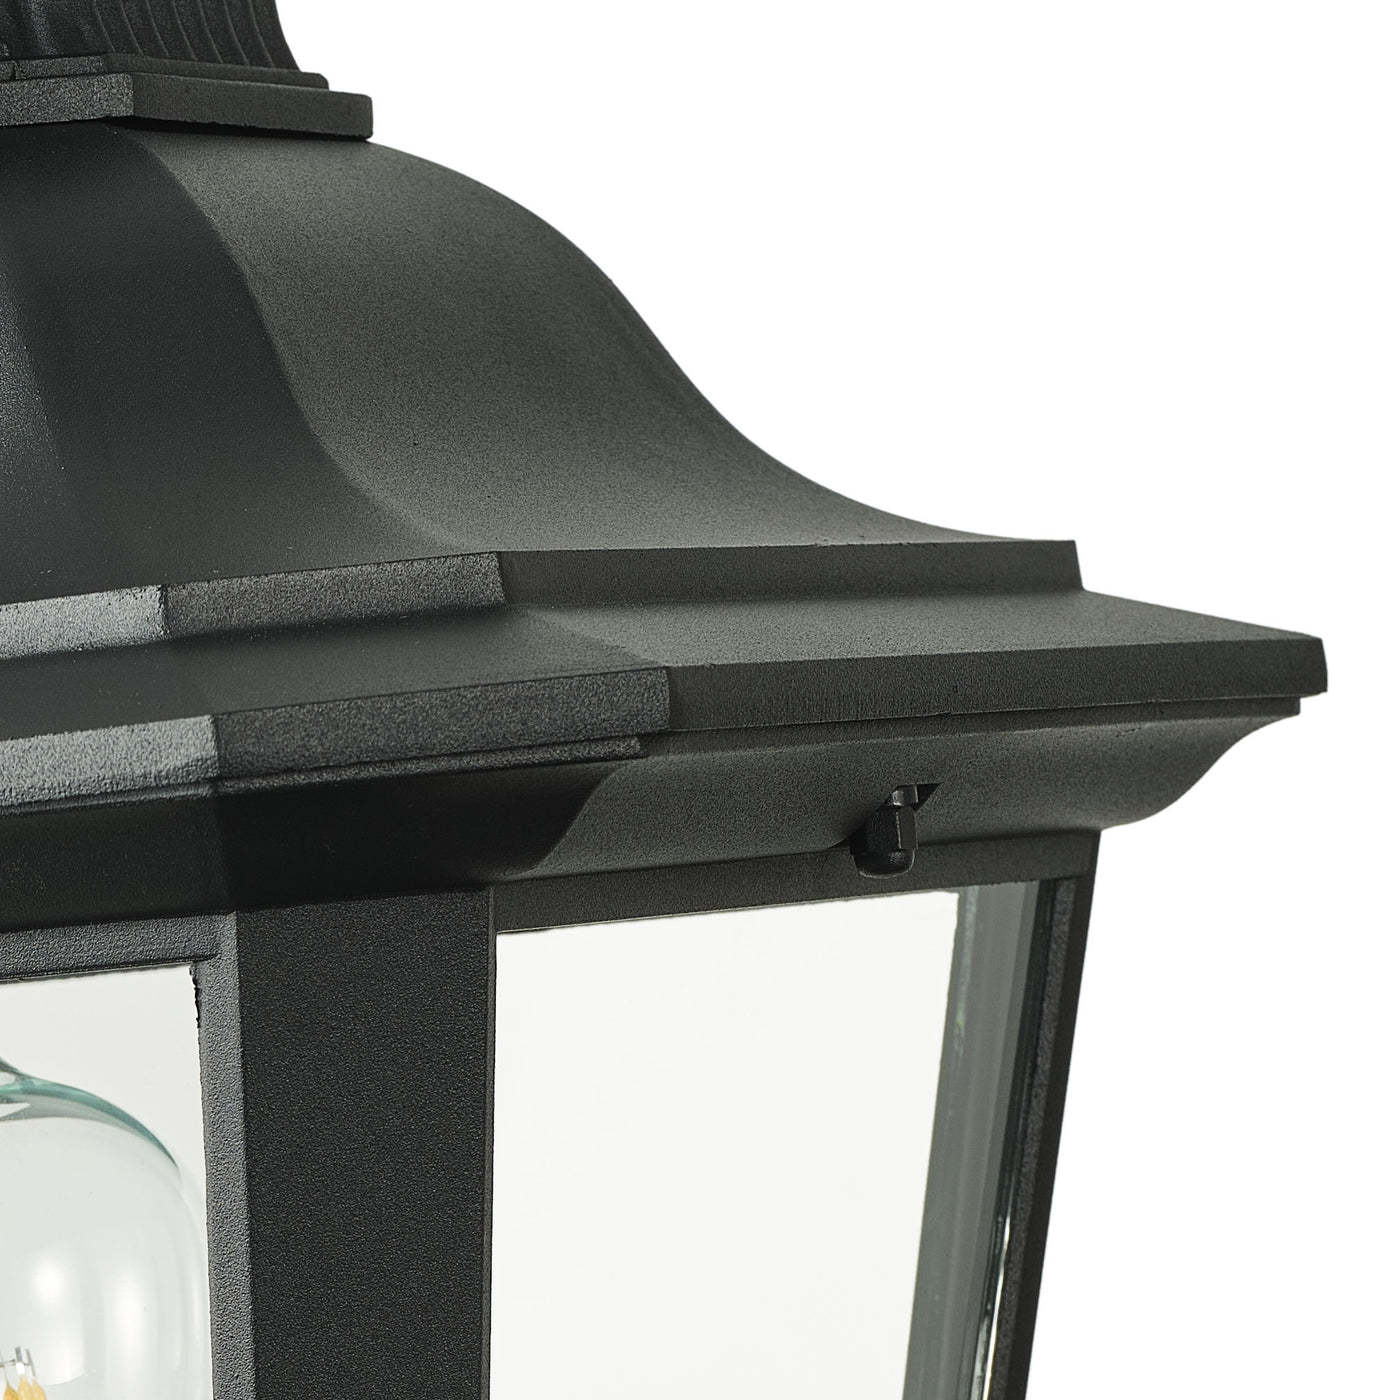 1-Light Pointed Roof Waterproof Outdoor Lights